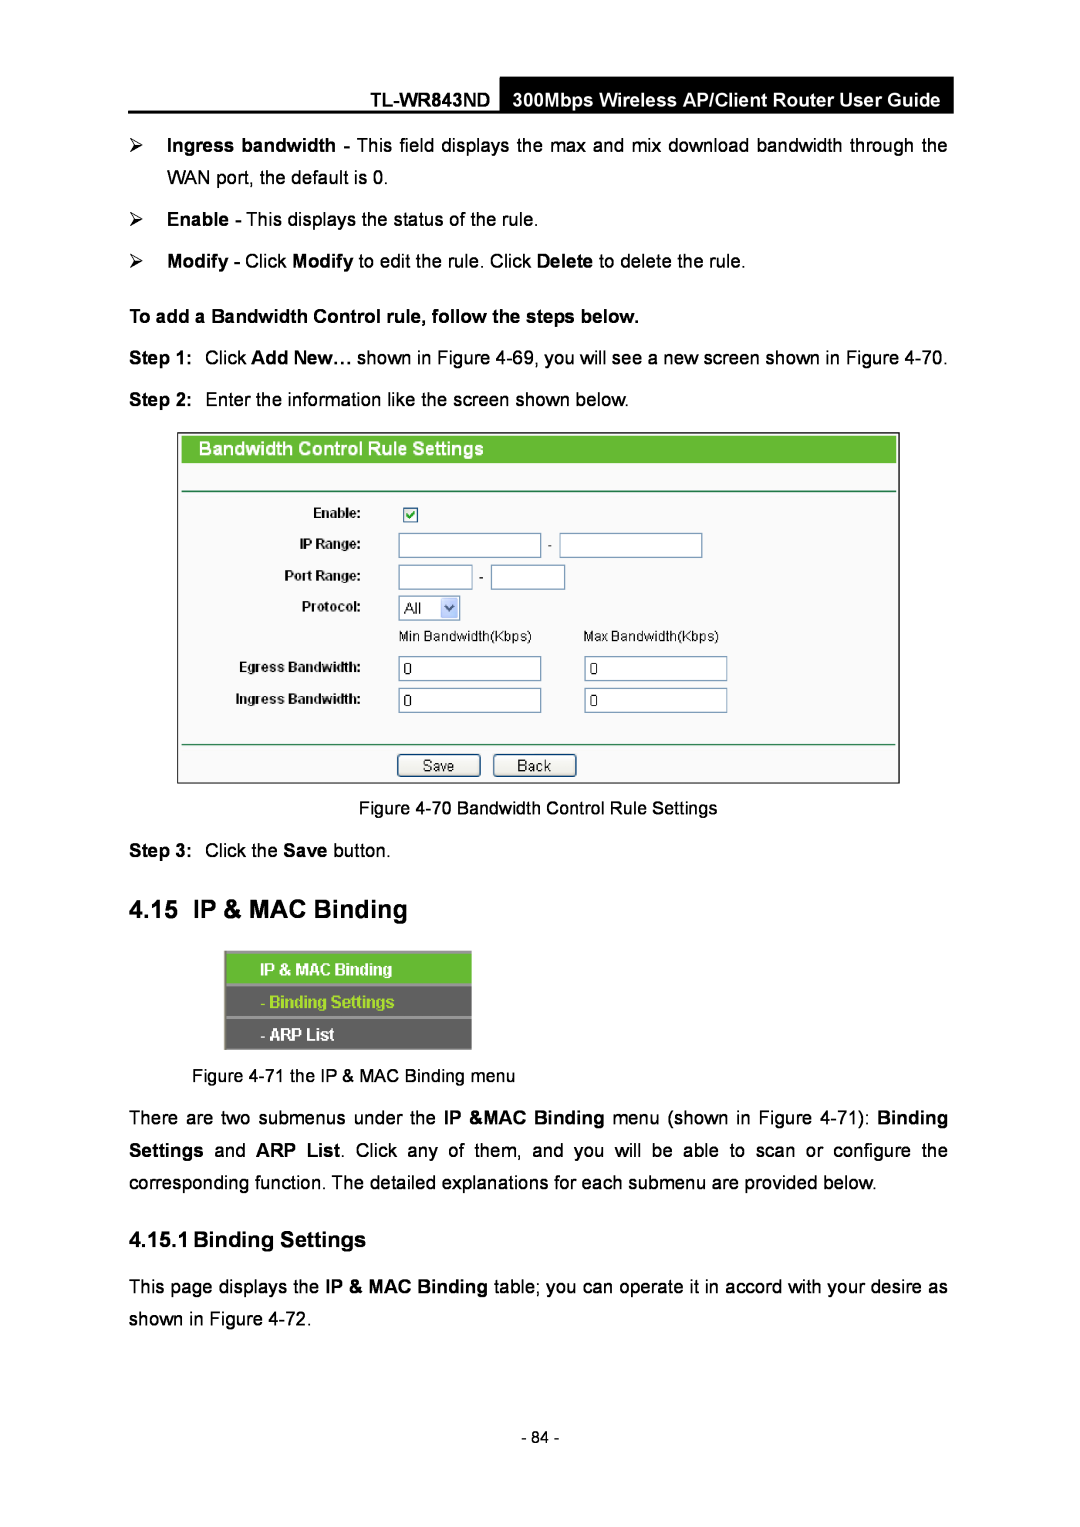 TP-Link TL-WR843ND manual 4.15 IP & MAC Binding, Binding Settings, To add a Bandwidth Control rule, follow the steps below 